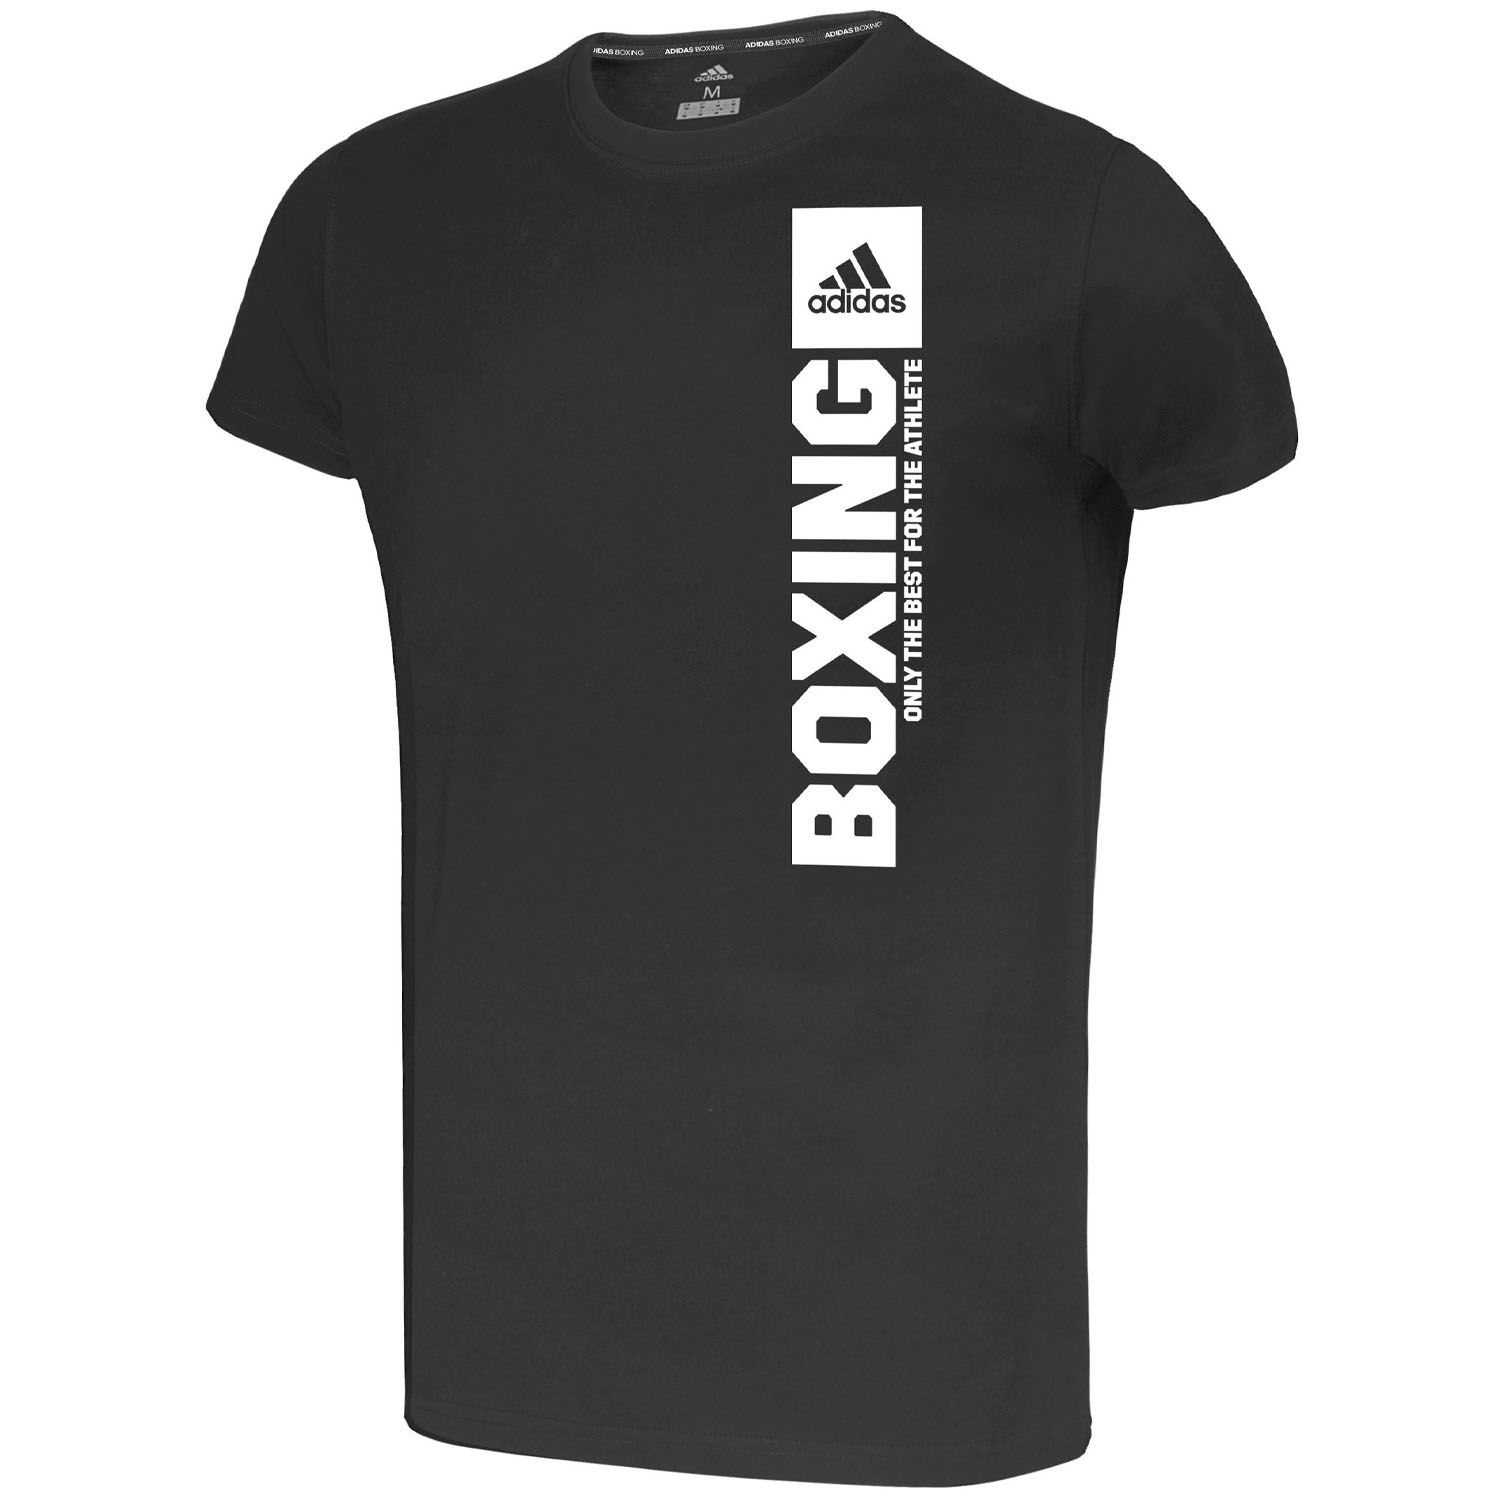 adidas T-Shirt, Community 22 Boxing, black